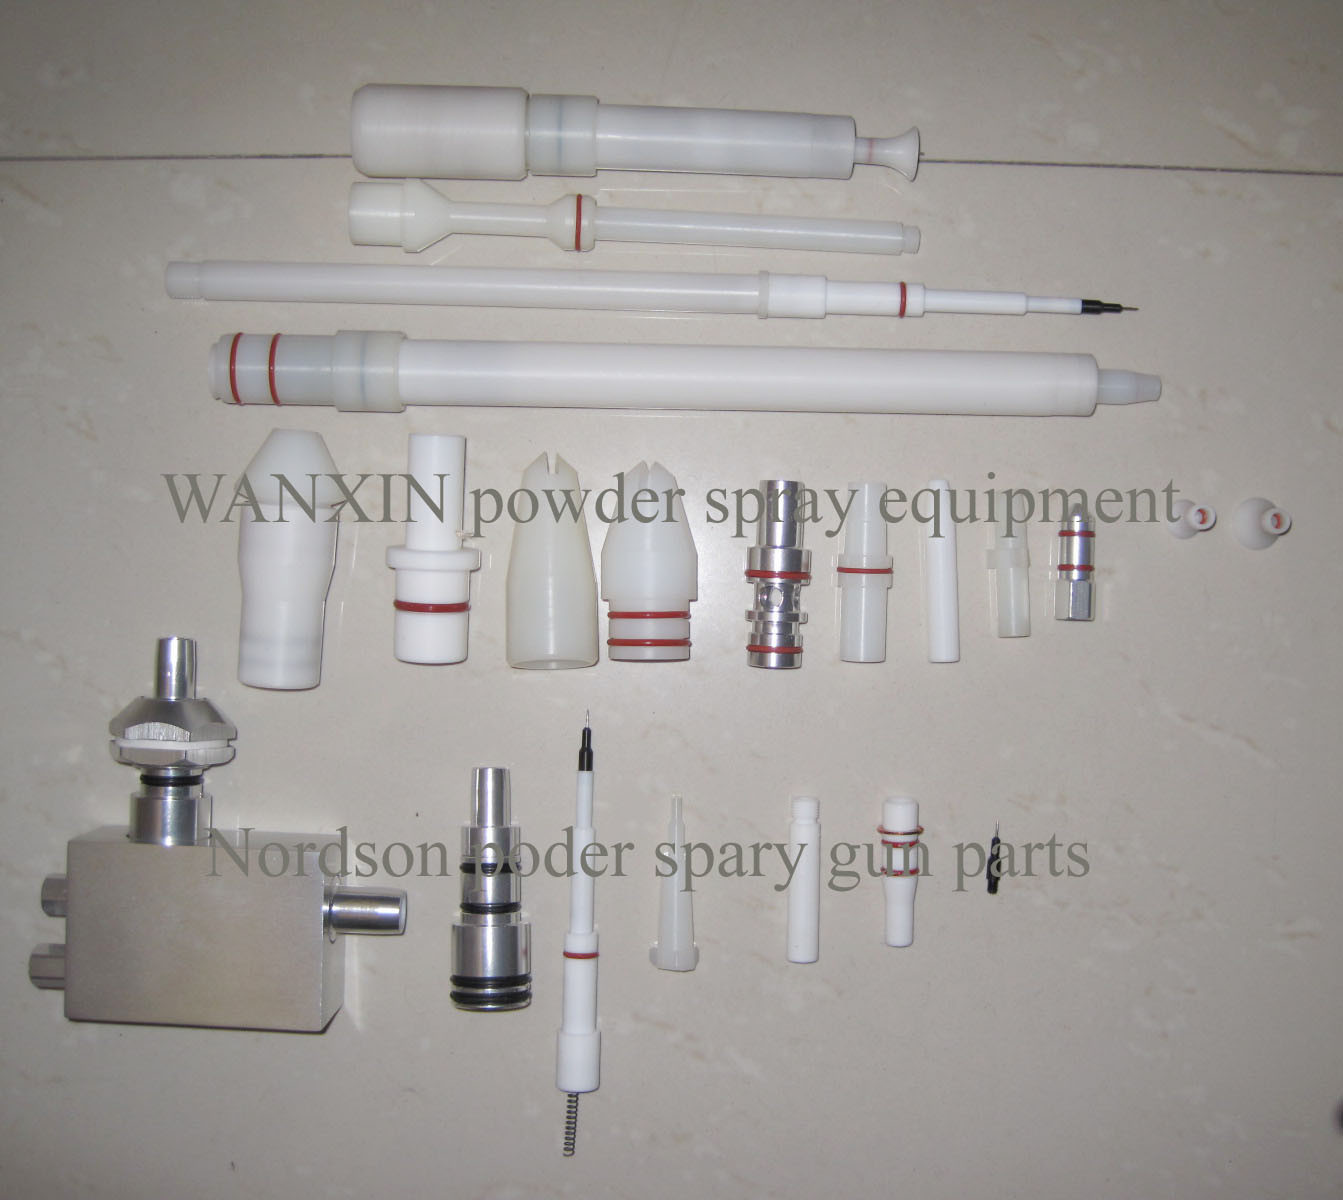 Nordson Powder Spray Gun Parts (WX)